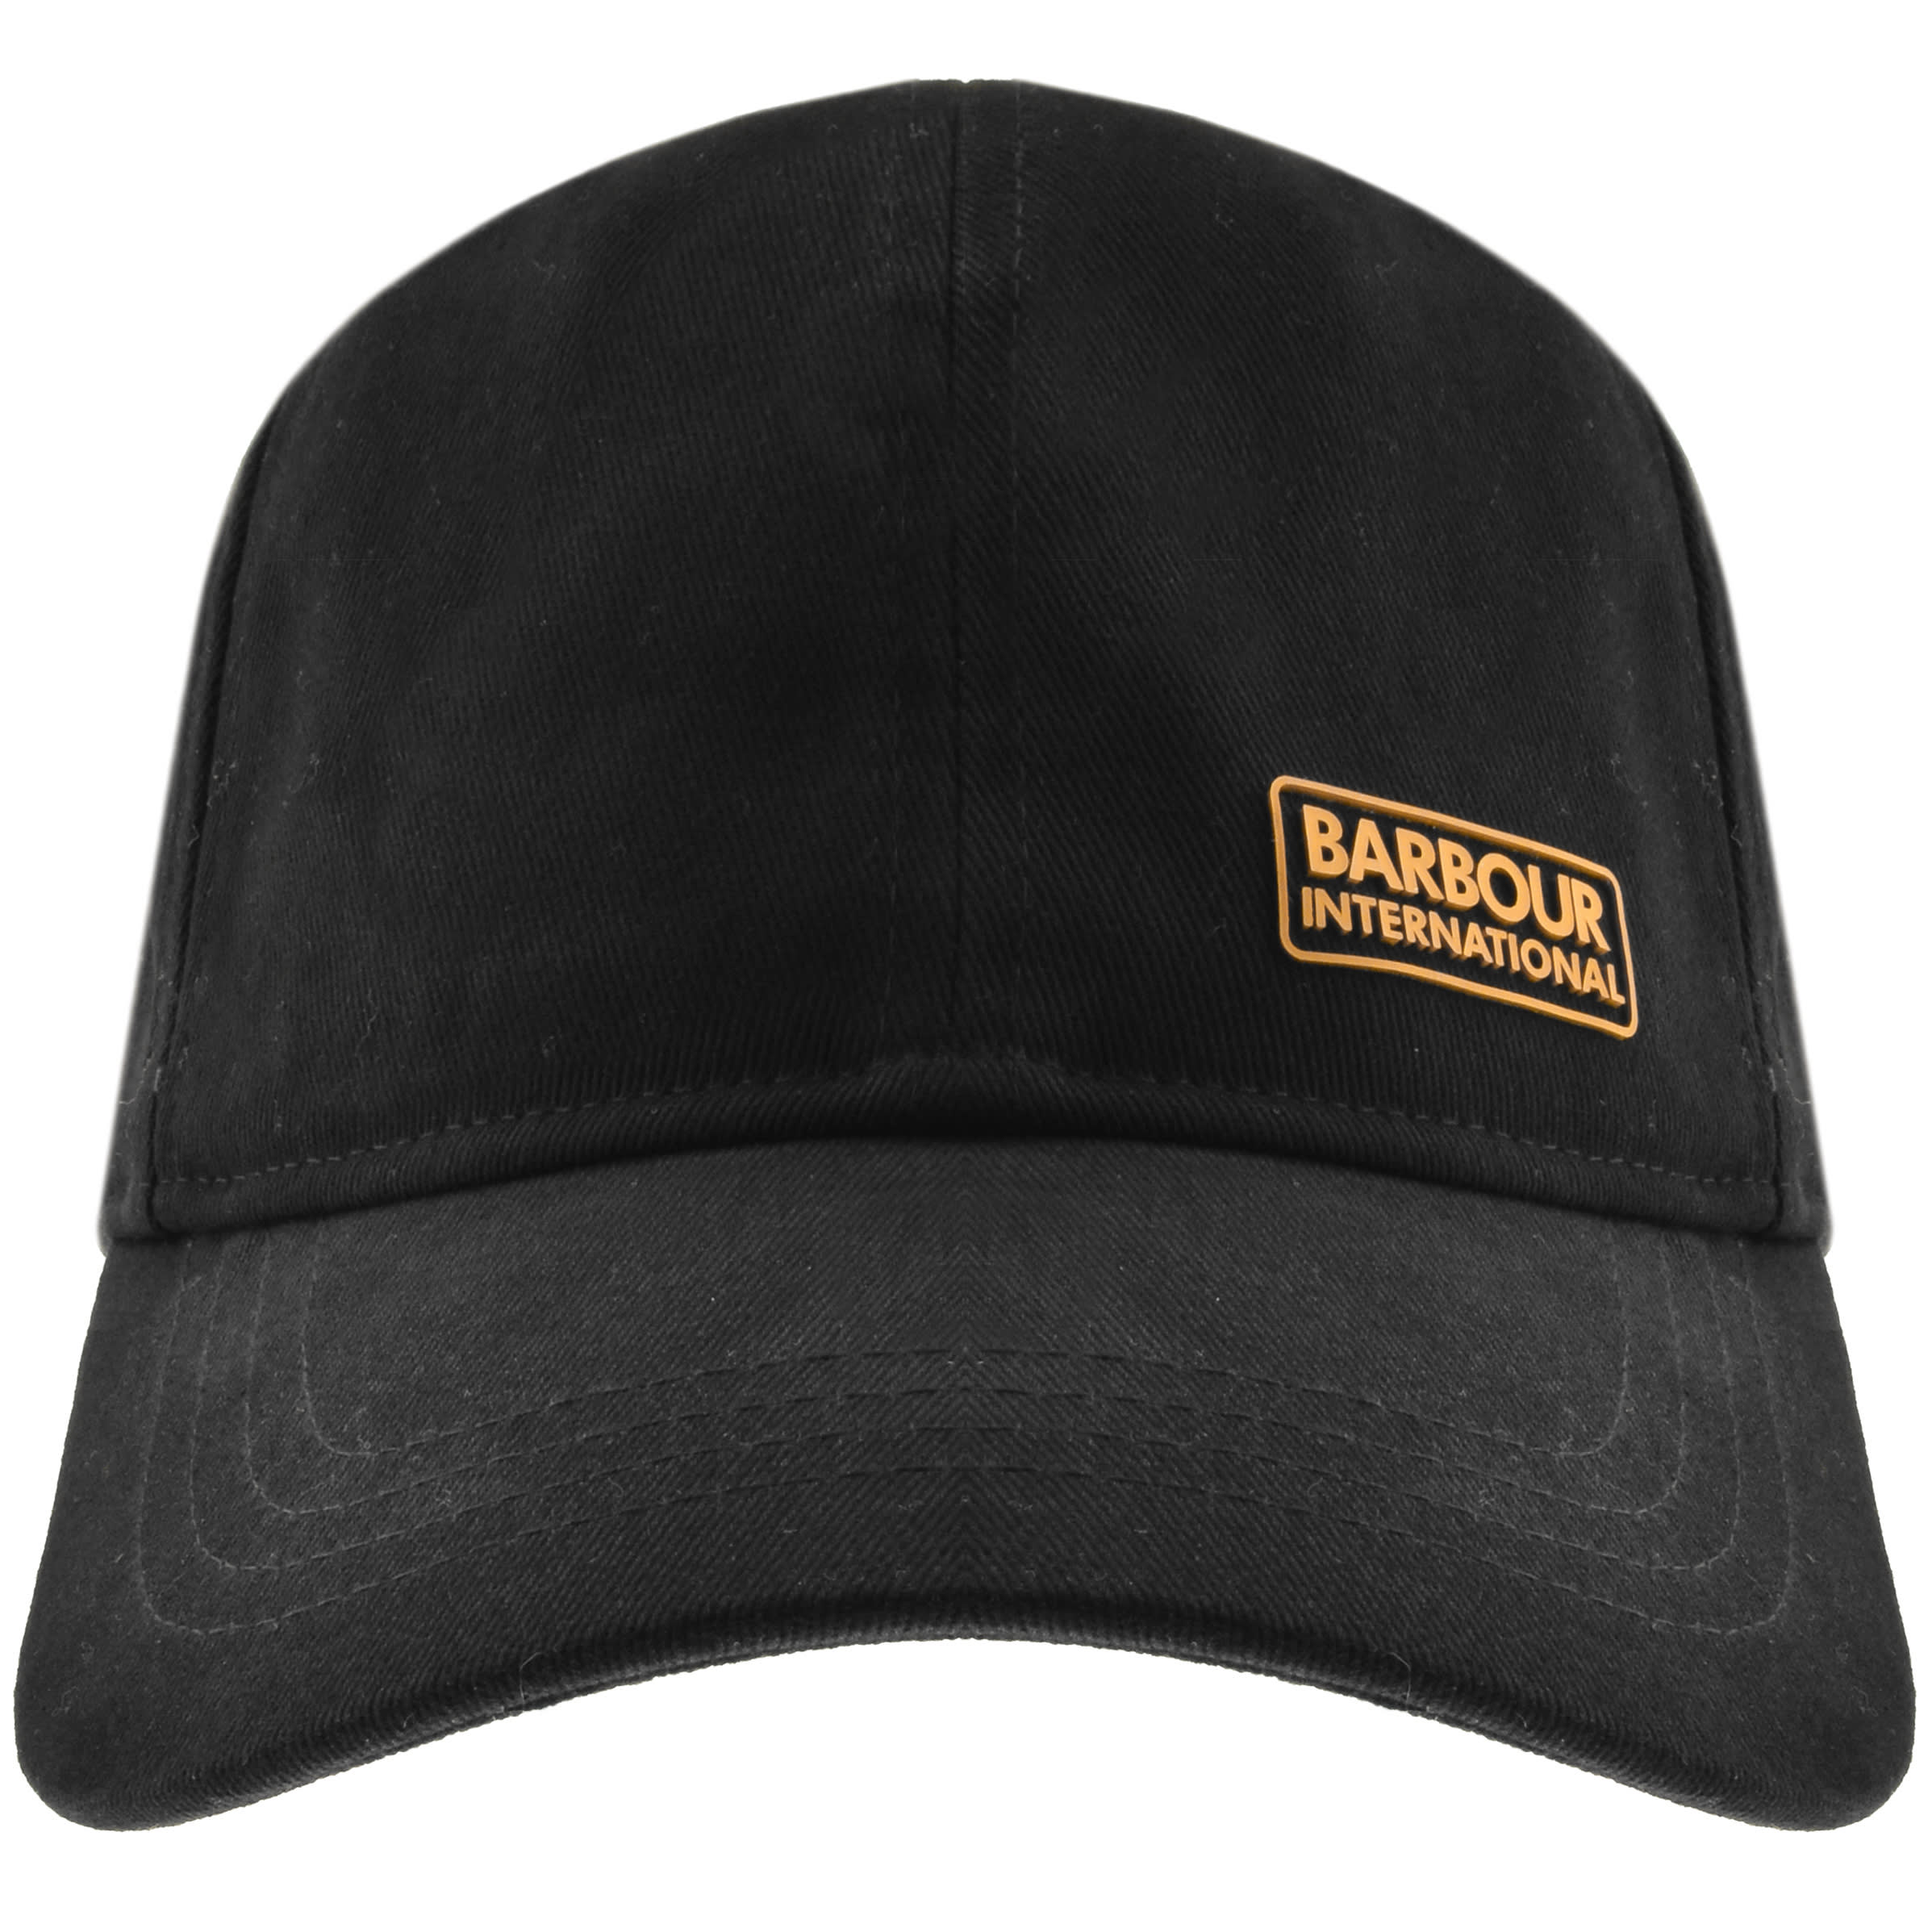 barbour international cap